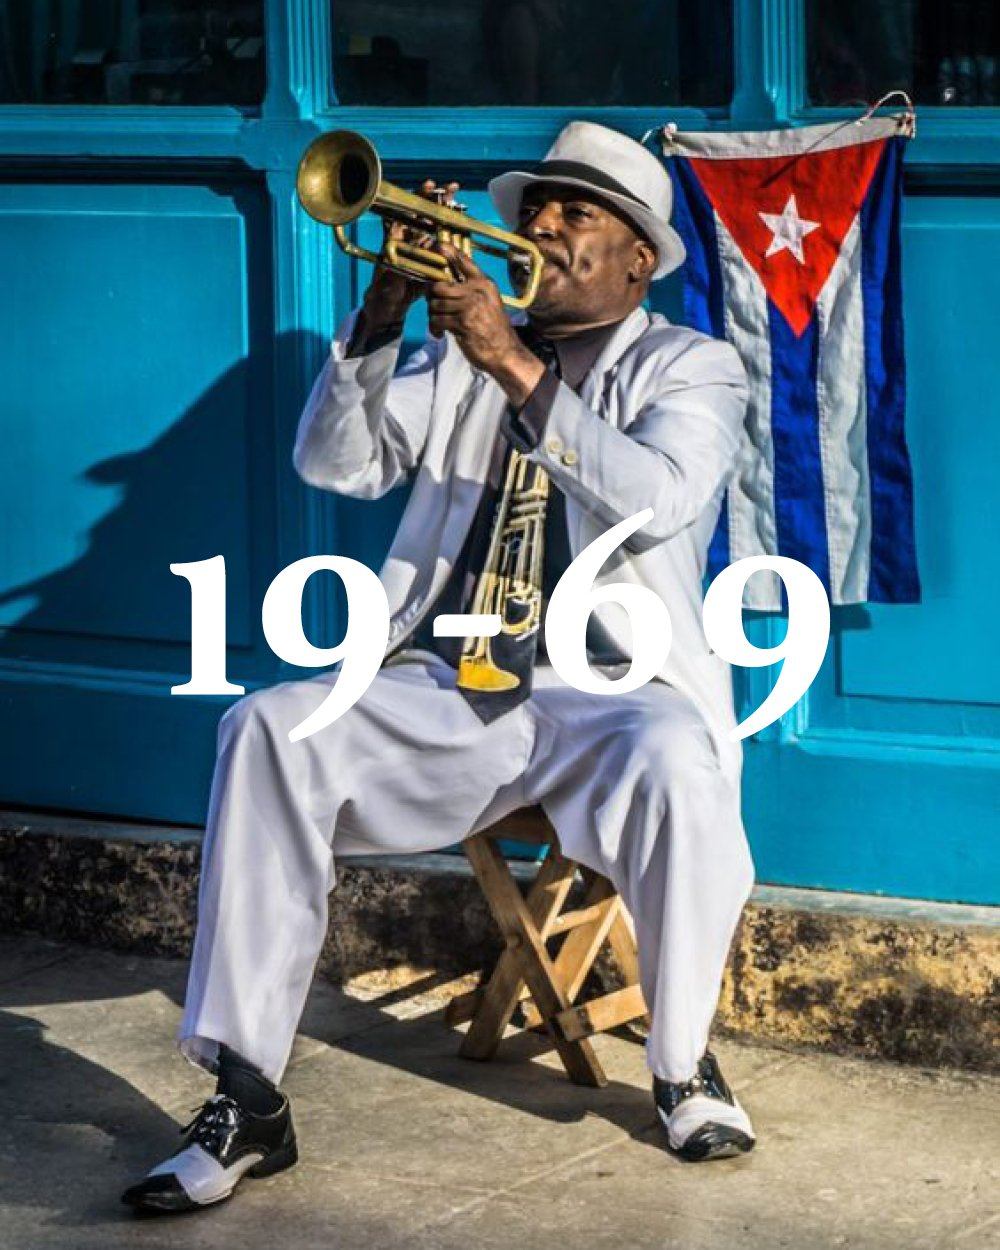 19-69 La Habana EdP Fragrance 19-69 